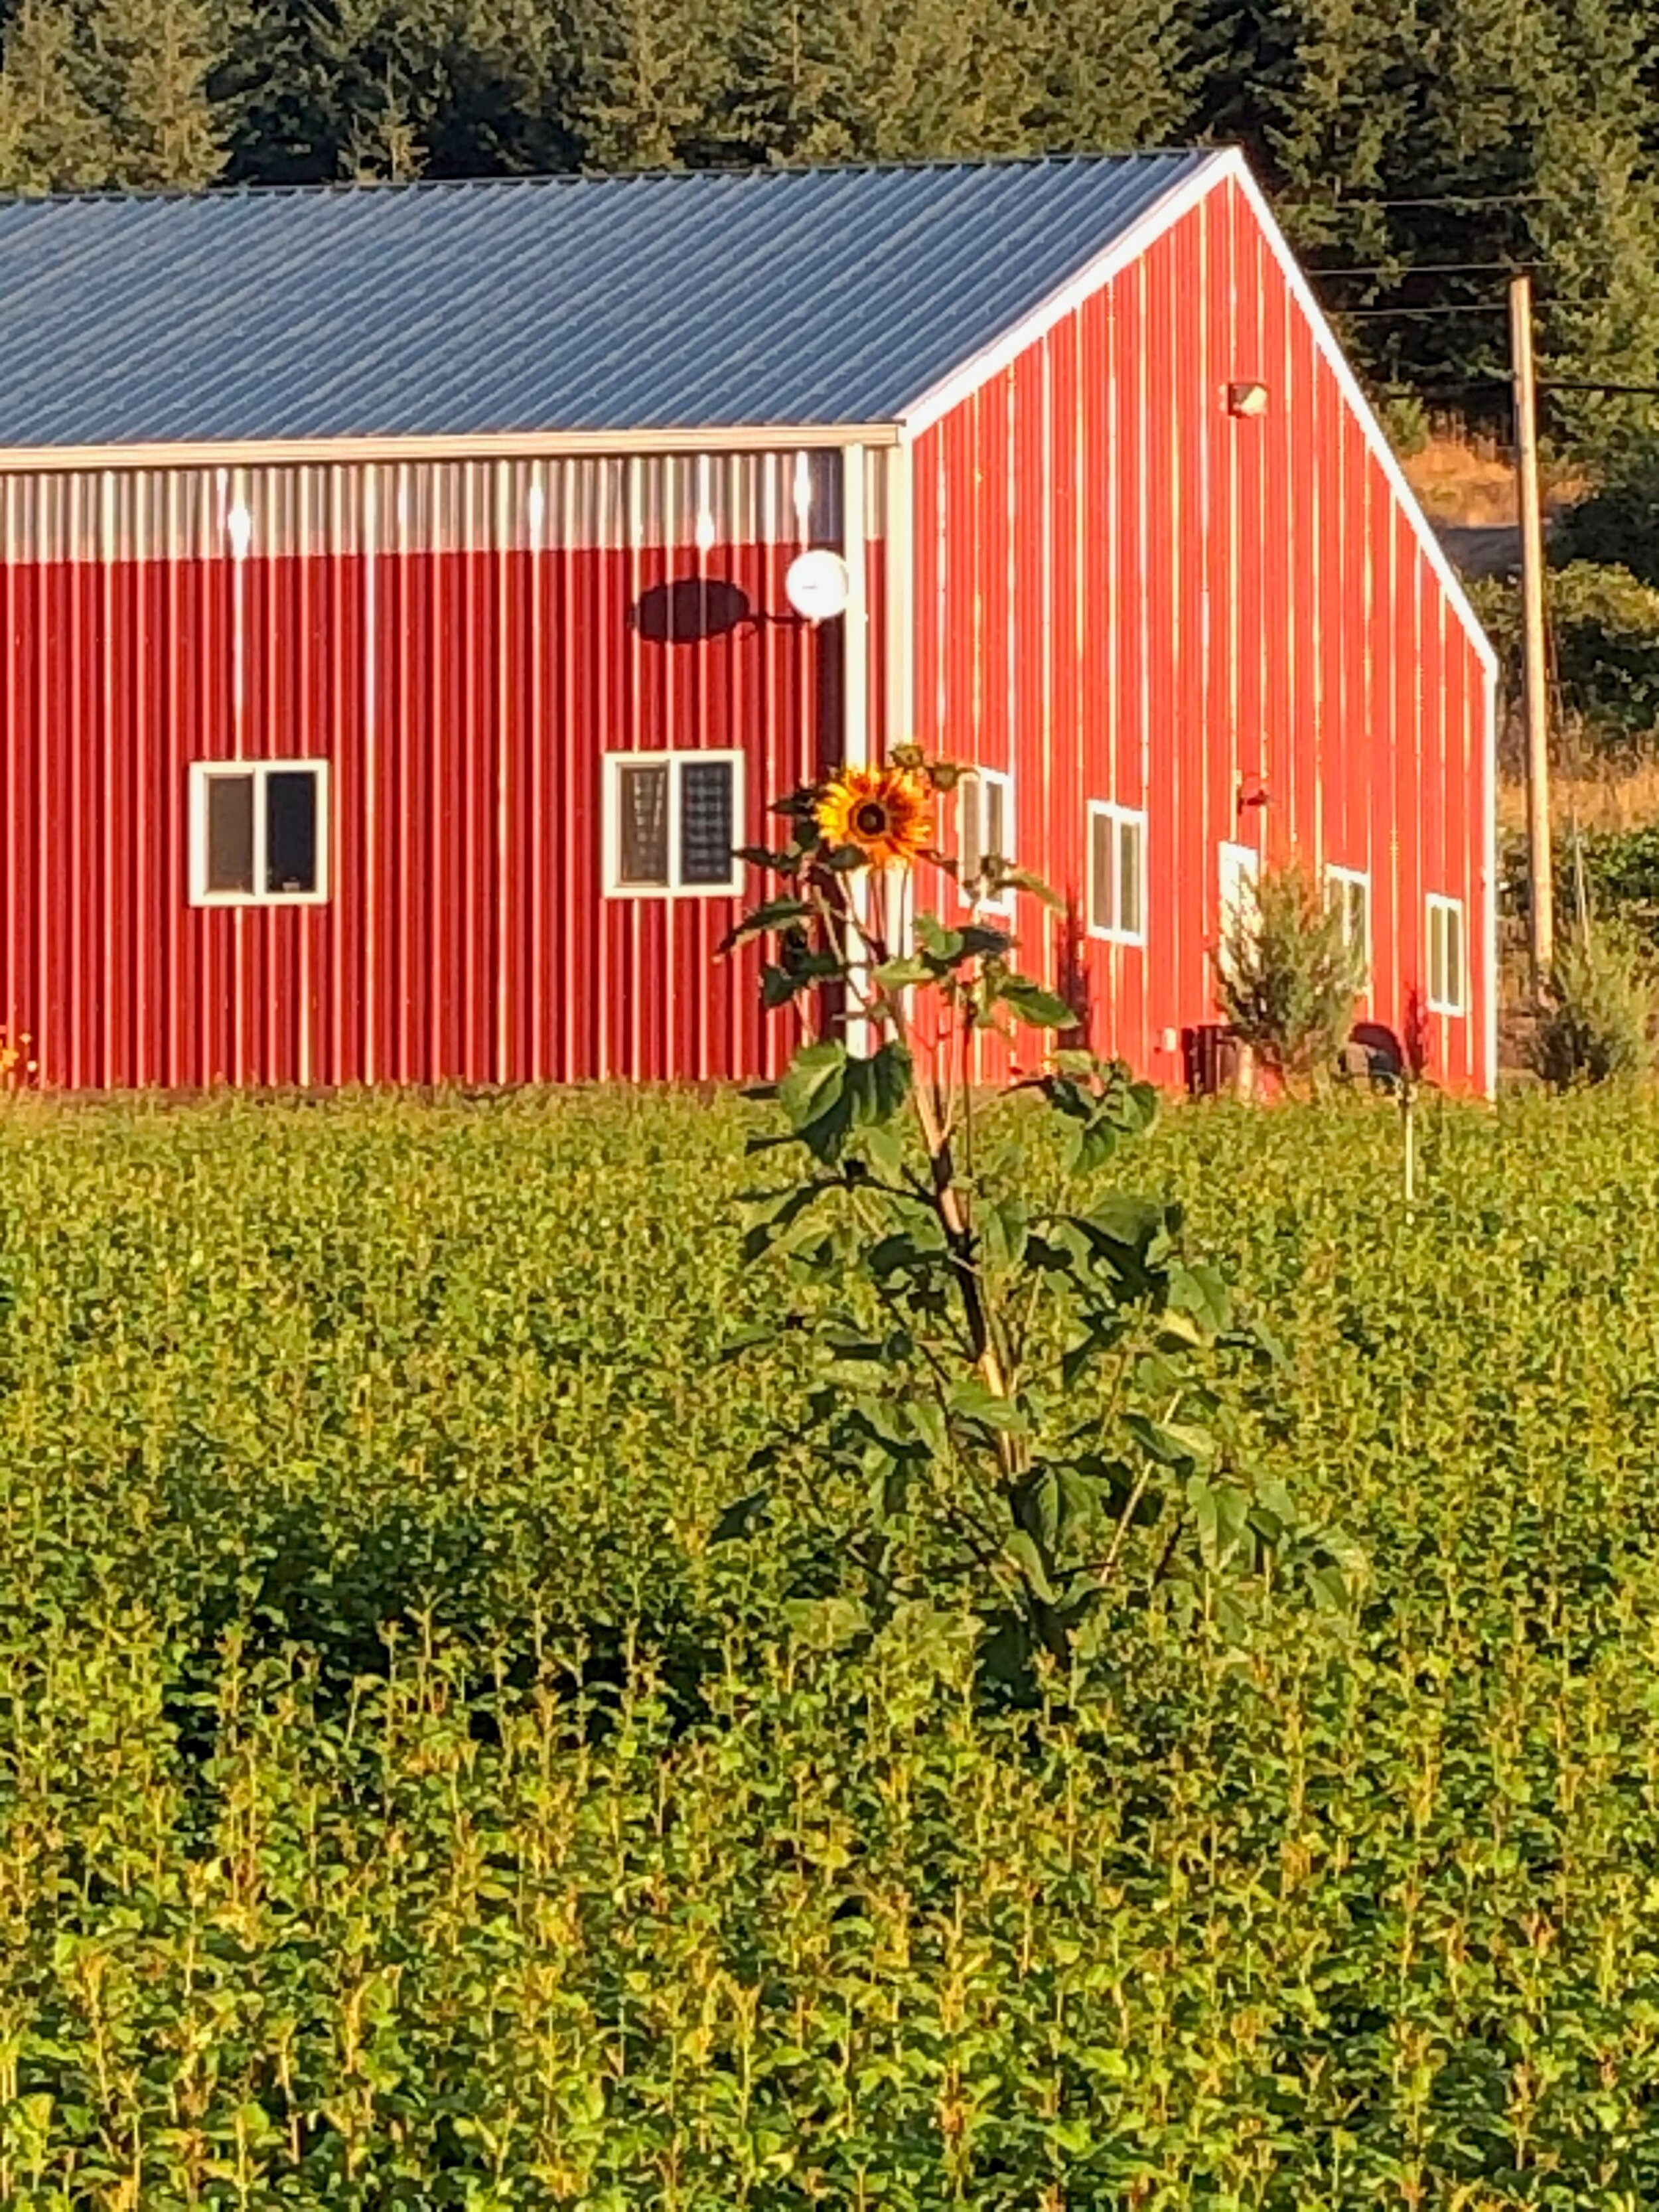 Barn and sunflowers.jpg